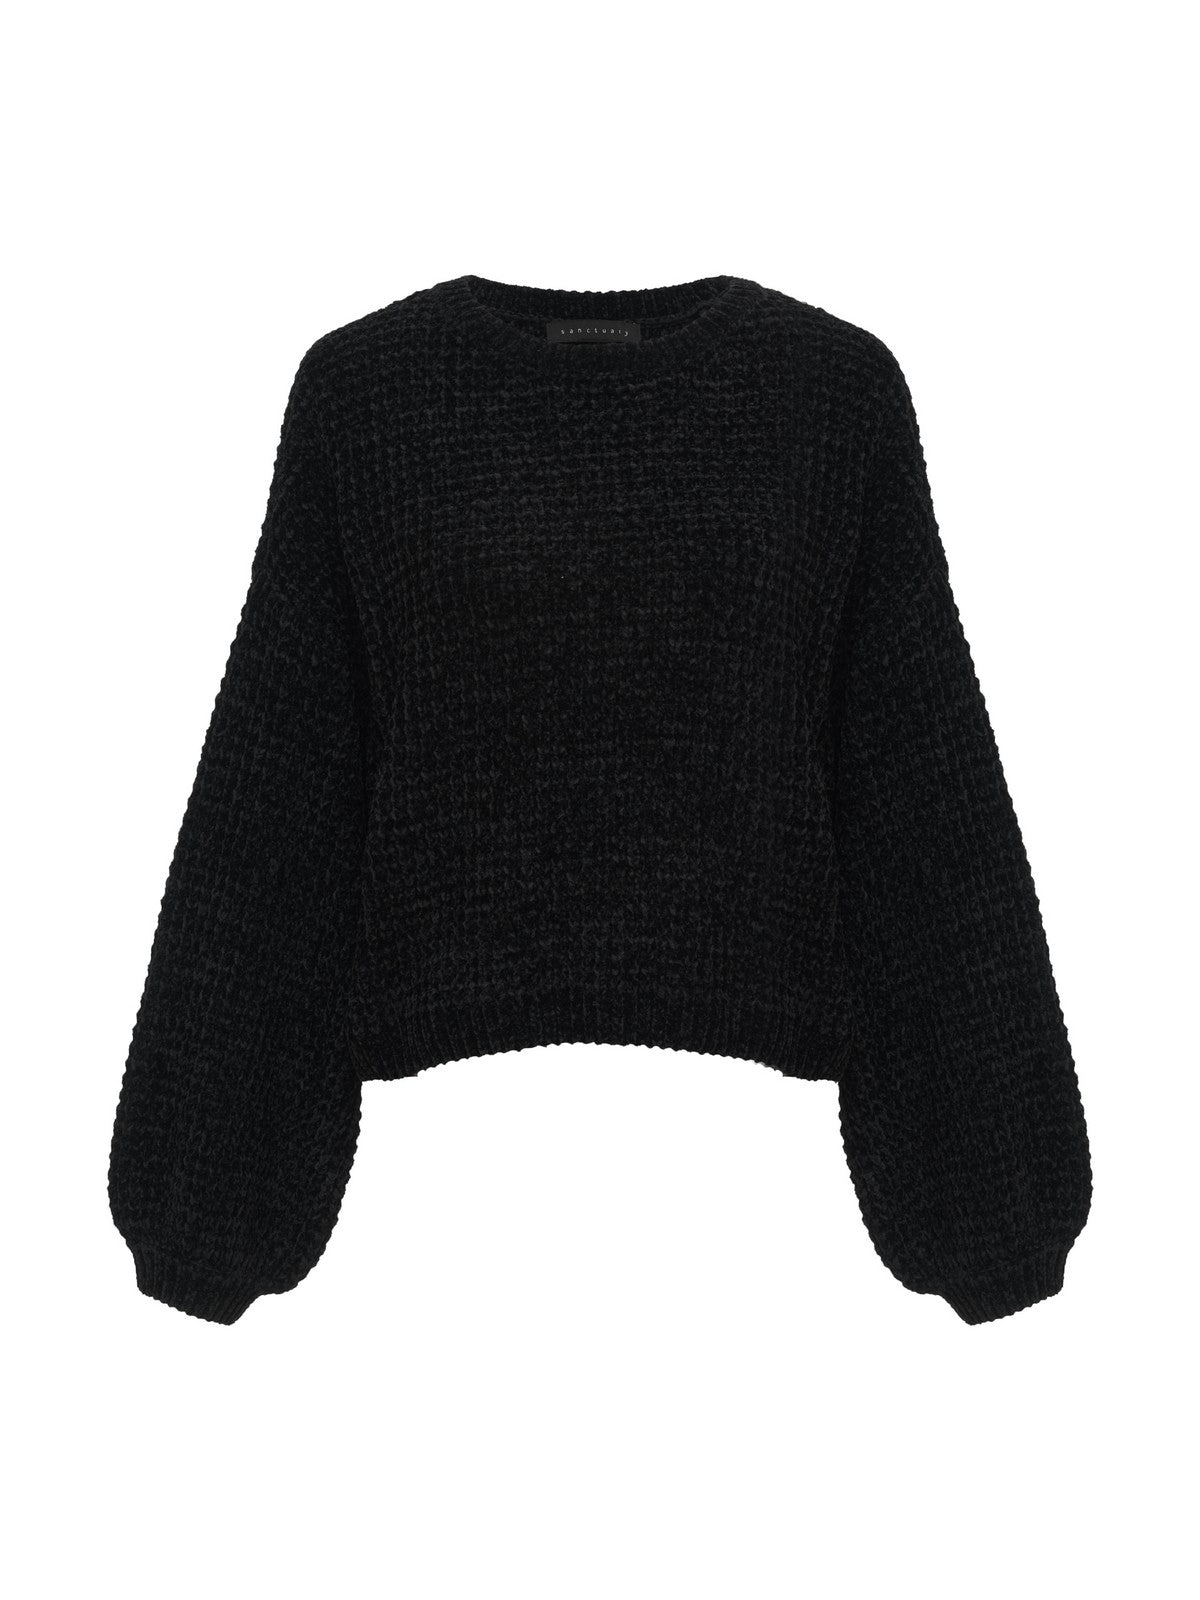 Under The Stars Chenille Sweater Black